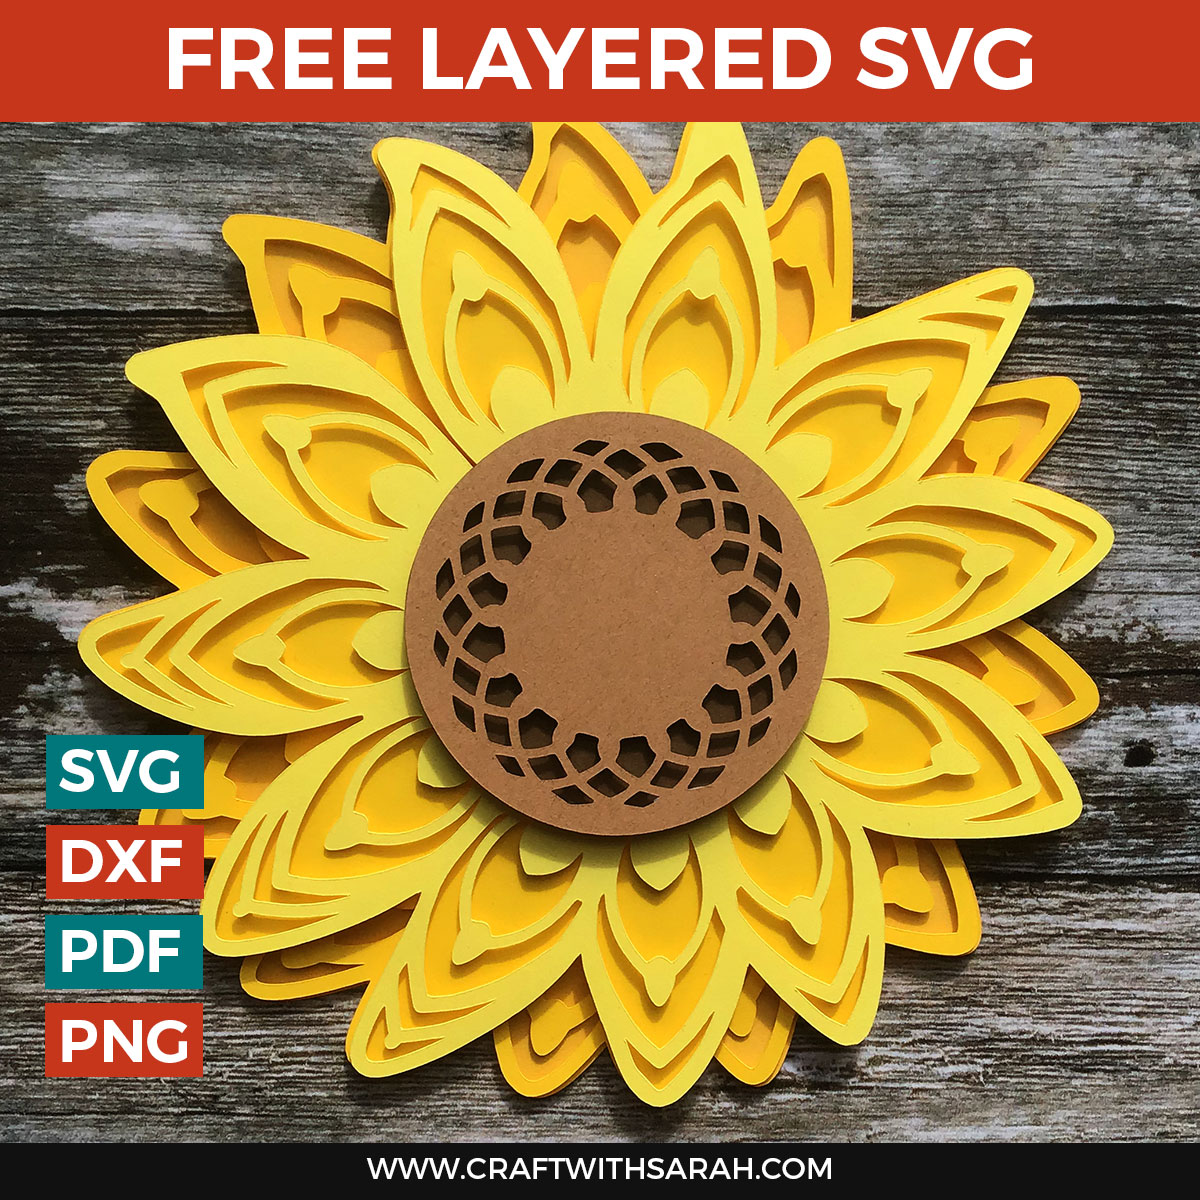 Download Sunflower Layered Svg Mandala Flower Cutting File Craft With Sarah